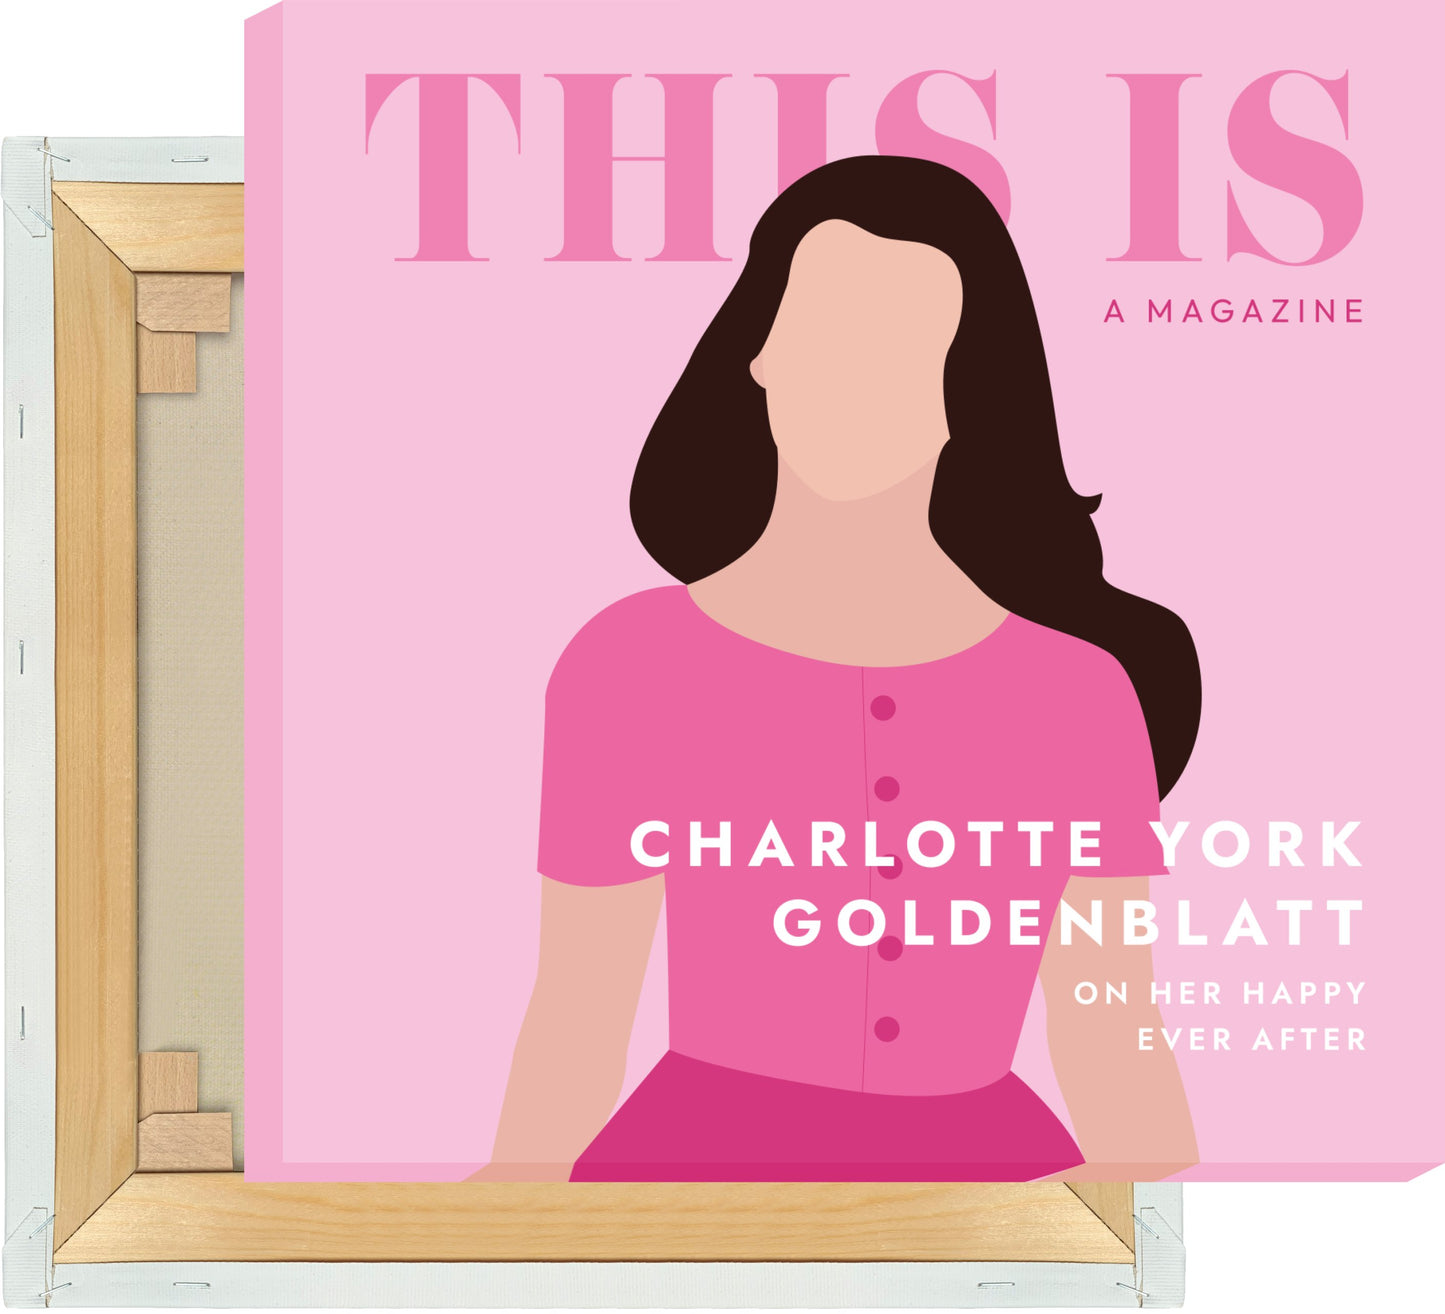 Leinwand Sex And The City - This Is A Magazine - Charlotte York Goldenblatt